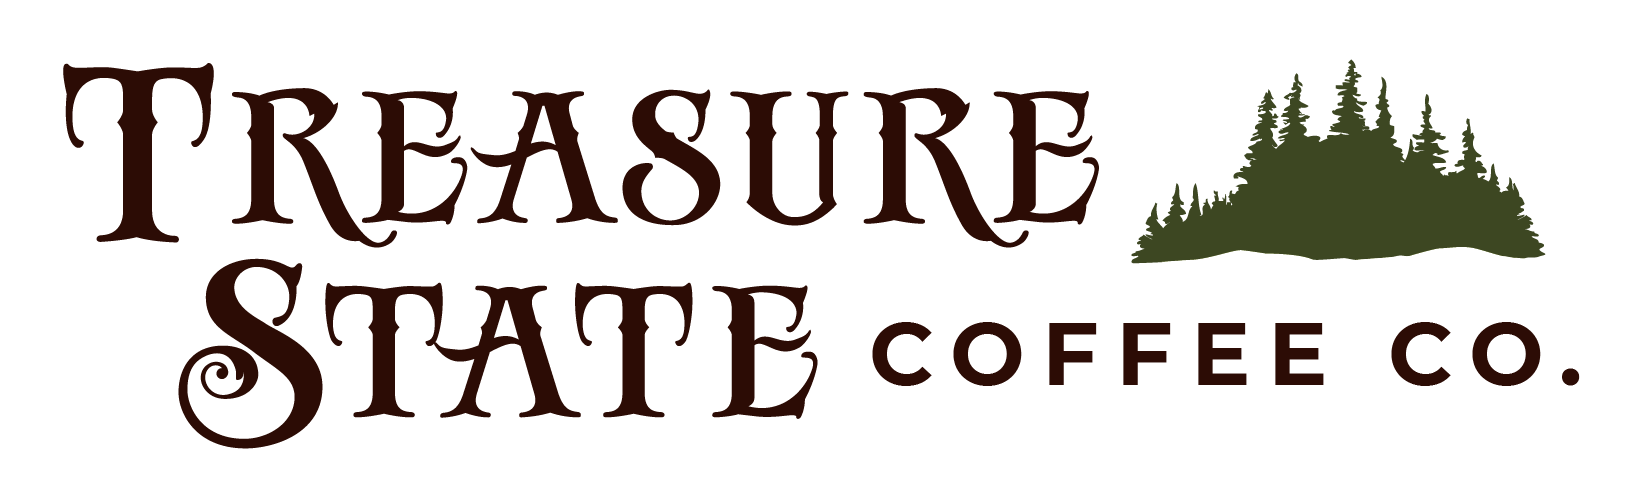 Treasure State Logo